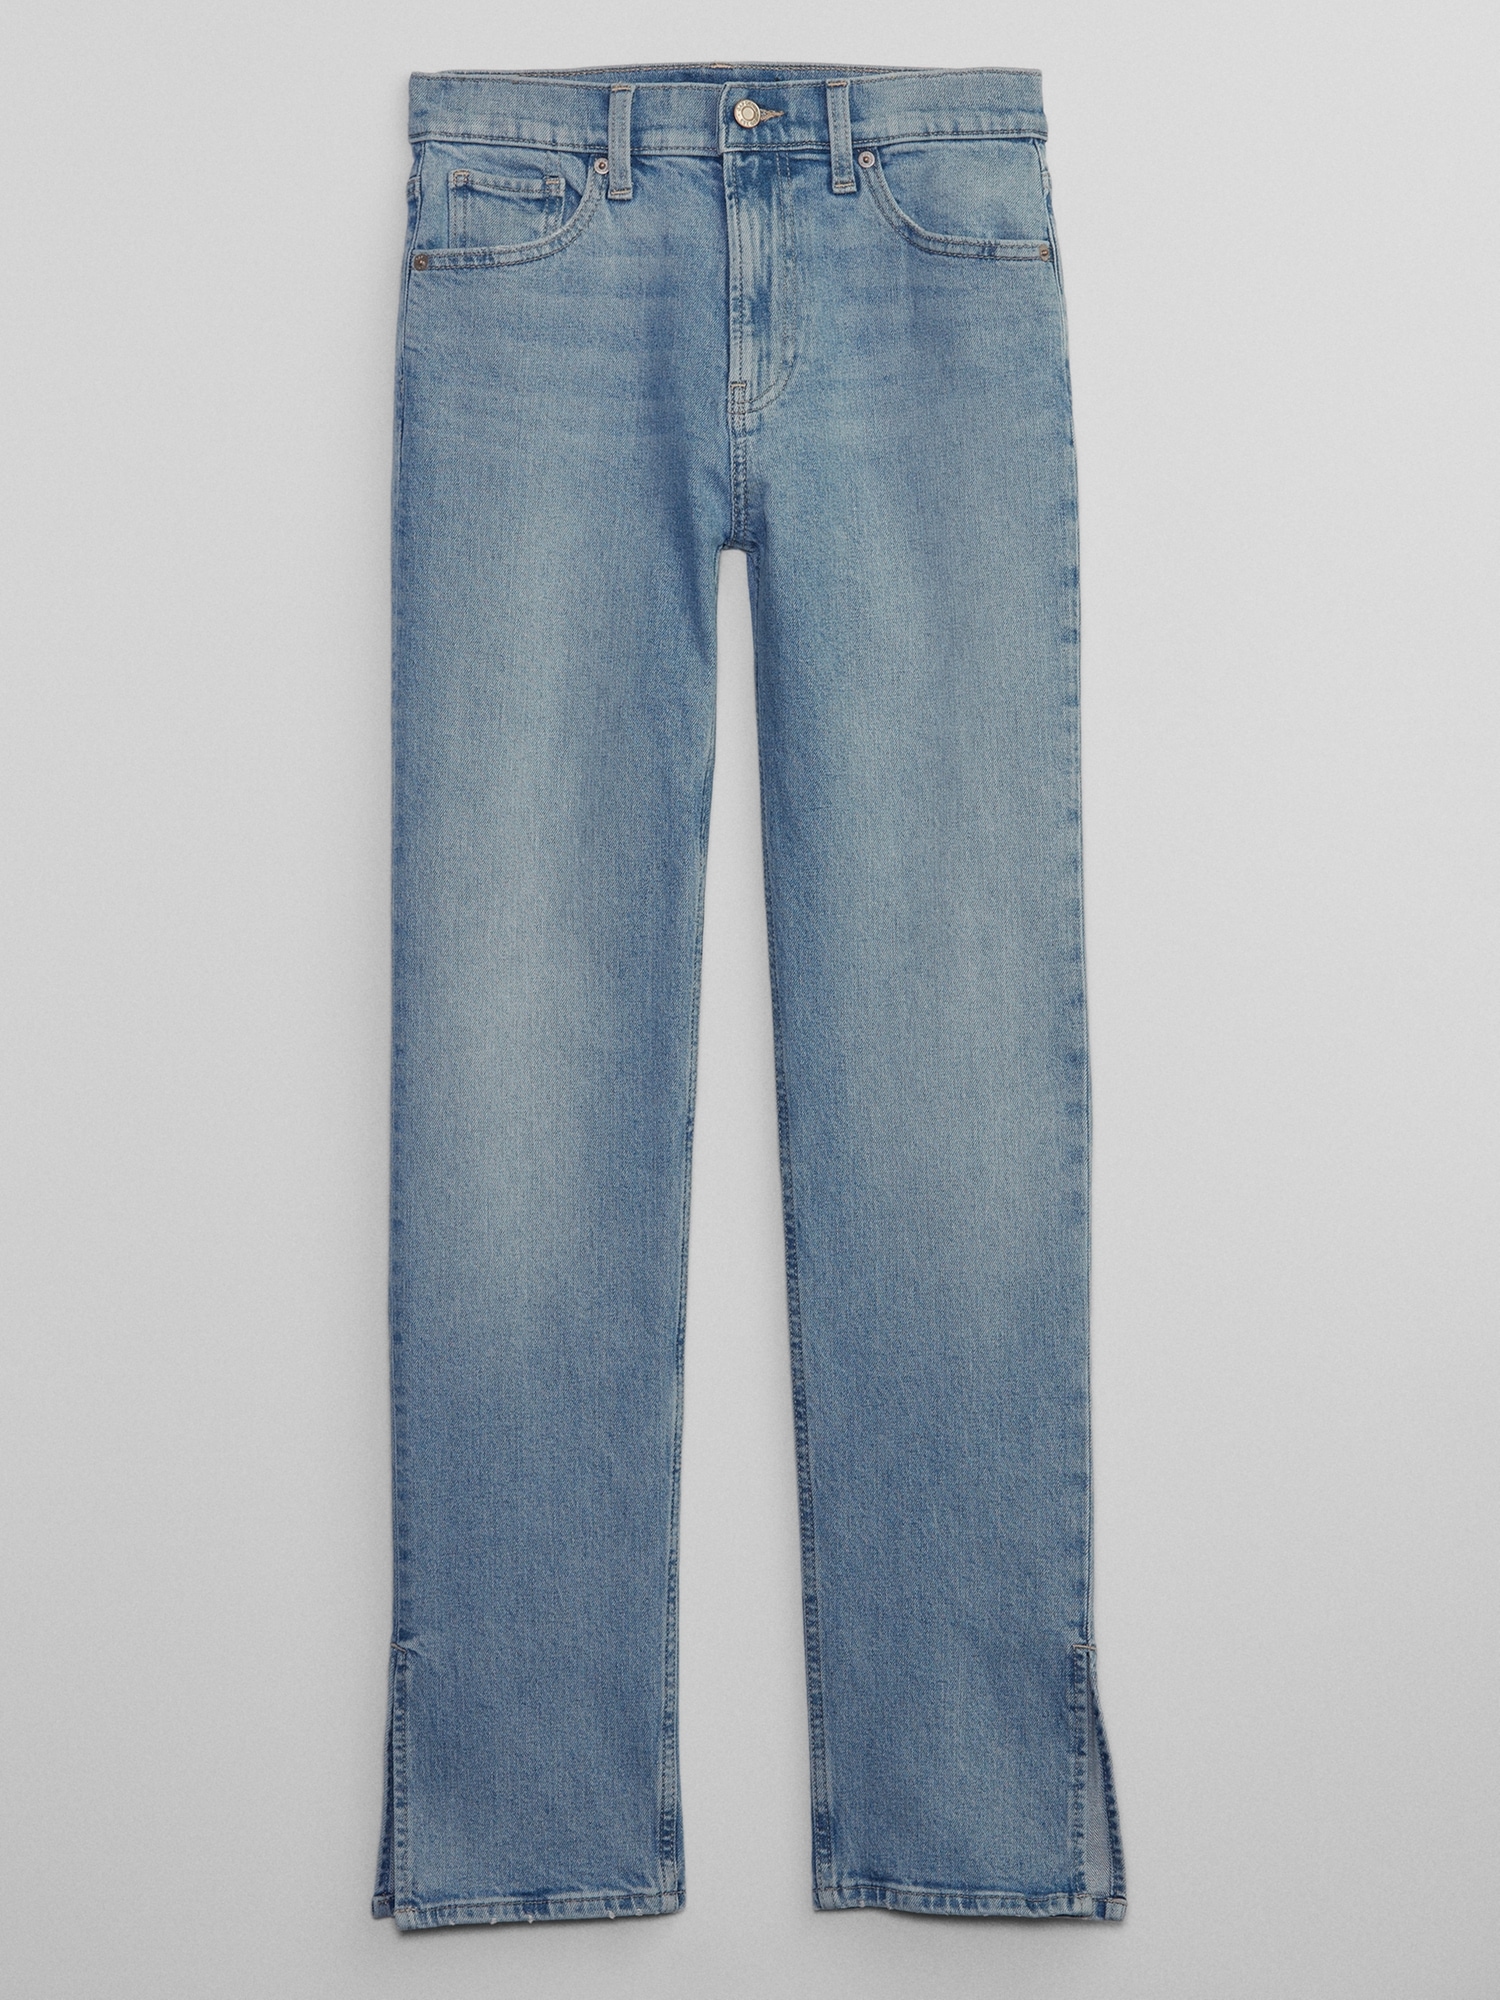 High Rise '90s Original Straight Jeans | Gap Factory